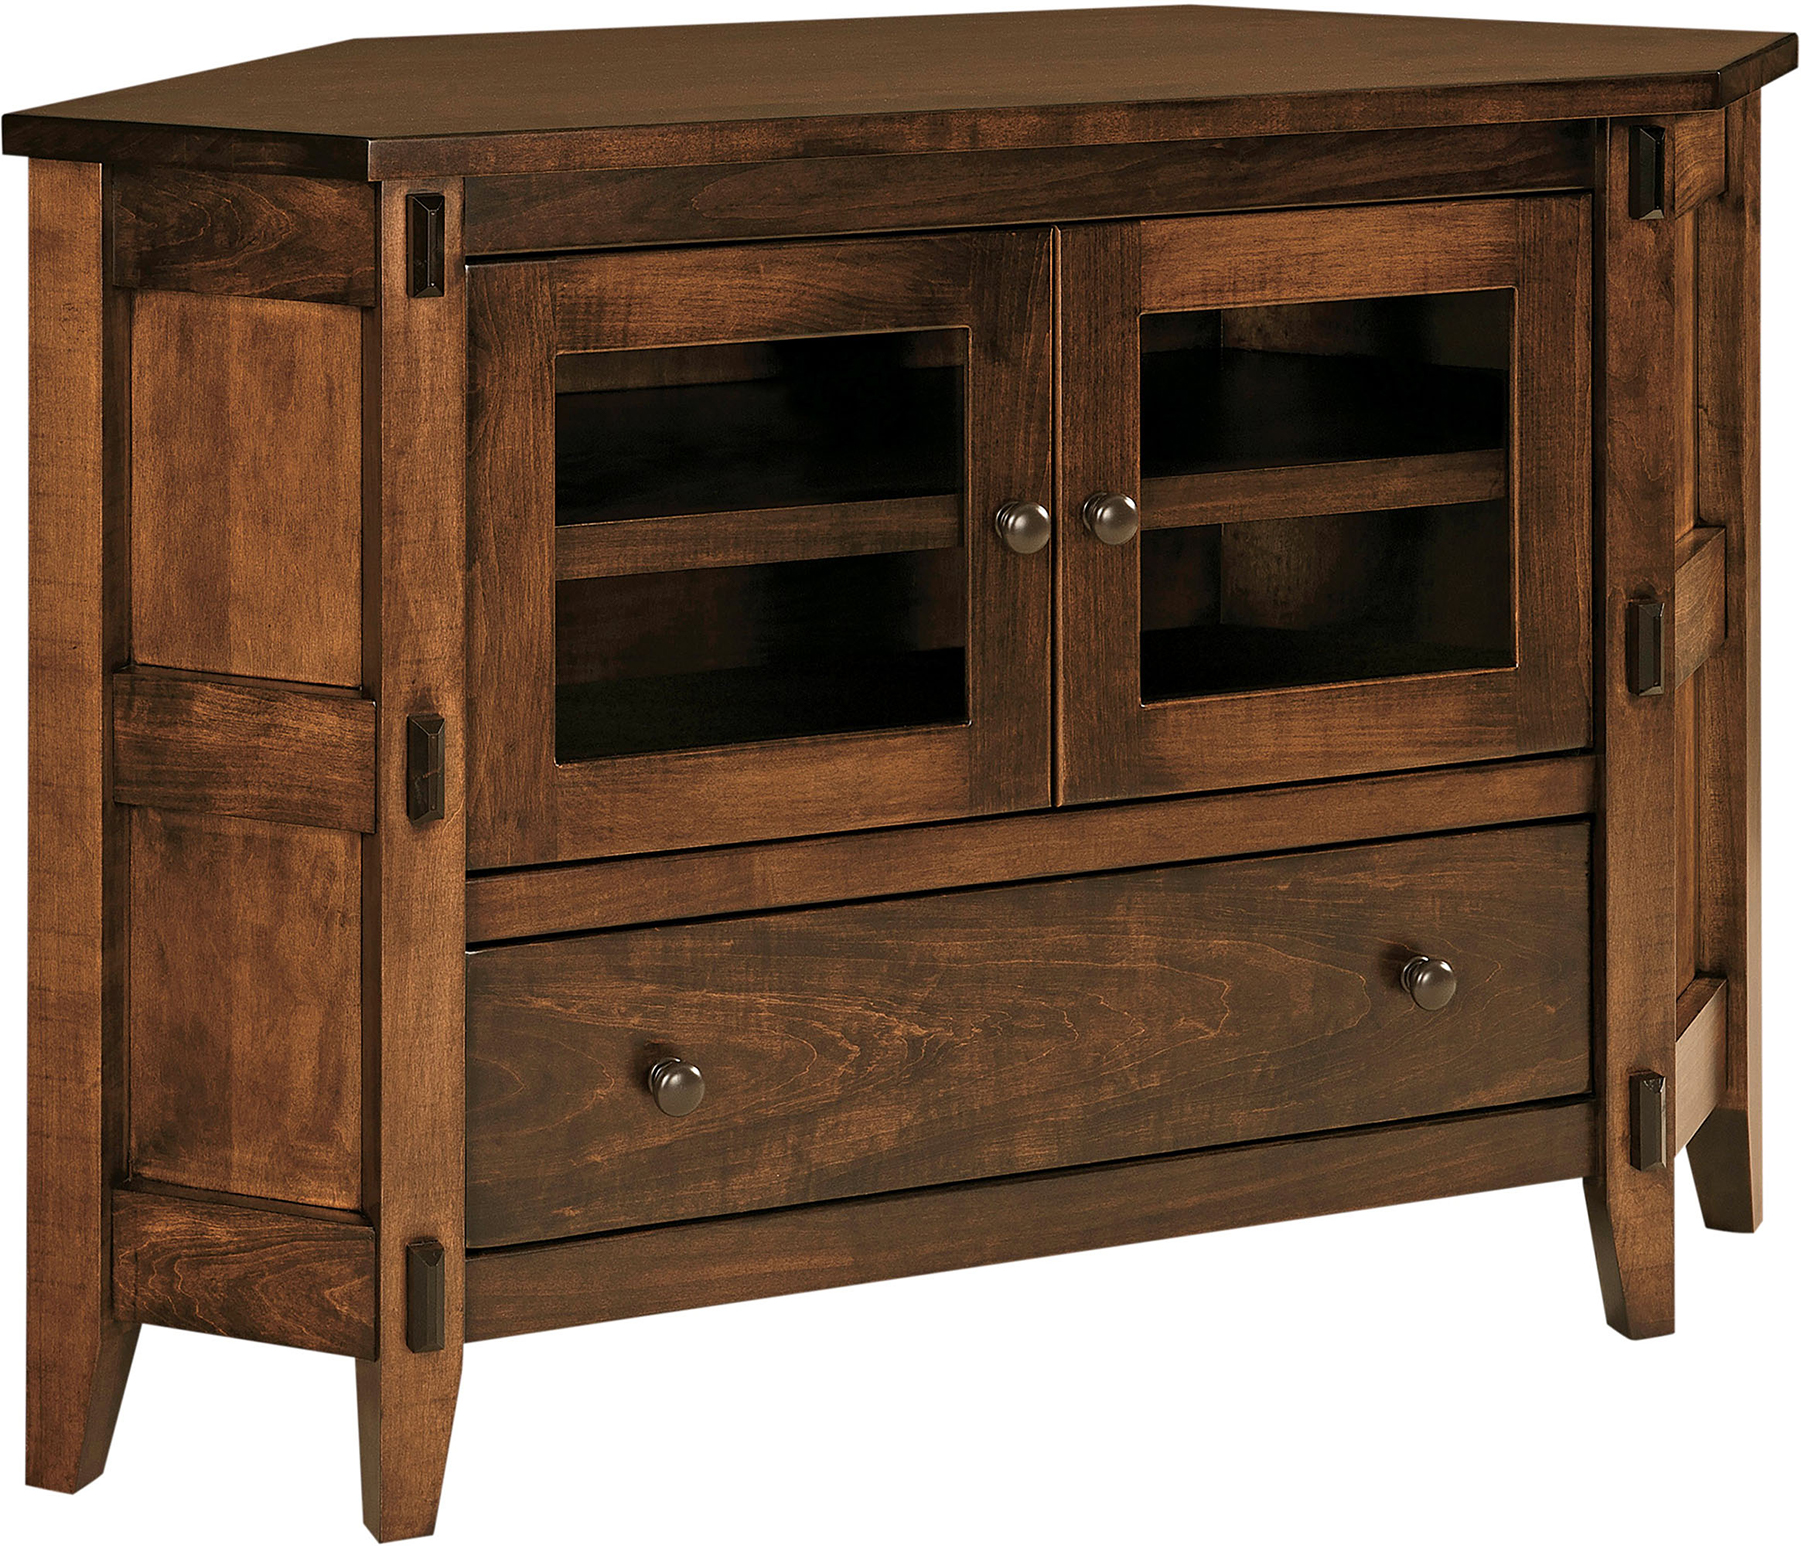 Bungalow Small Corner TV Cabinet | Amish Bungalow Corner ...